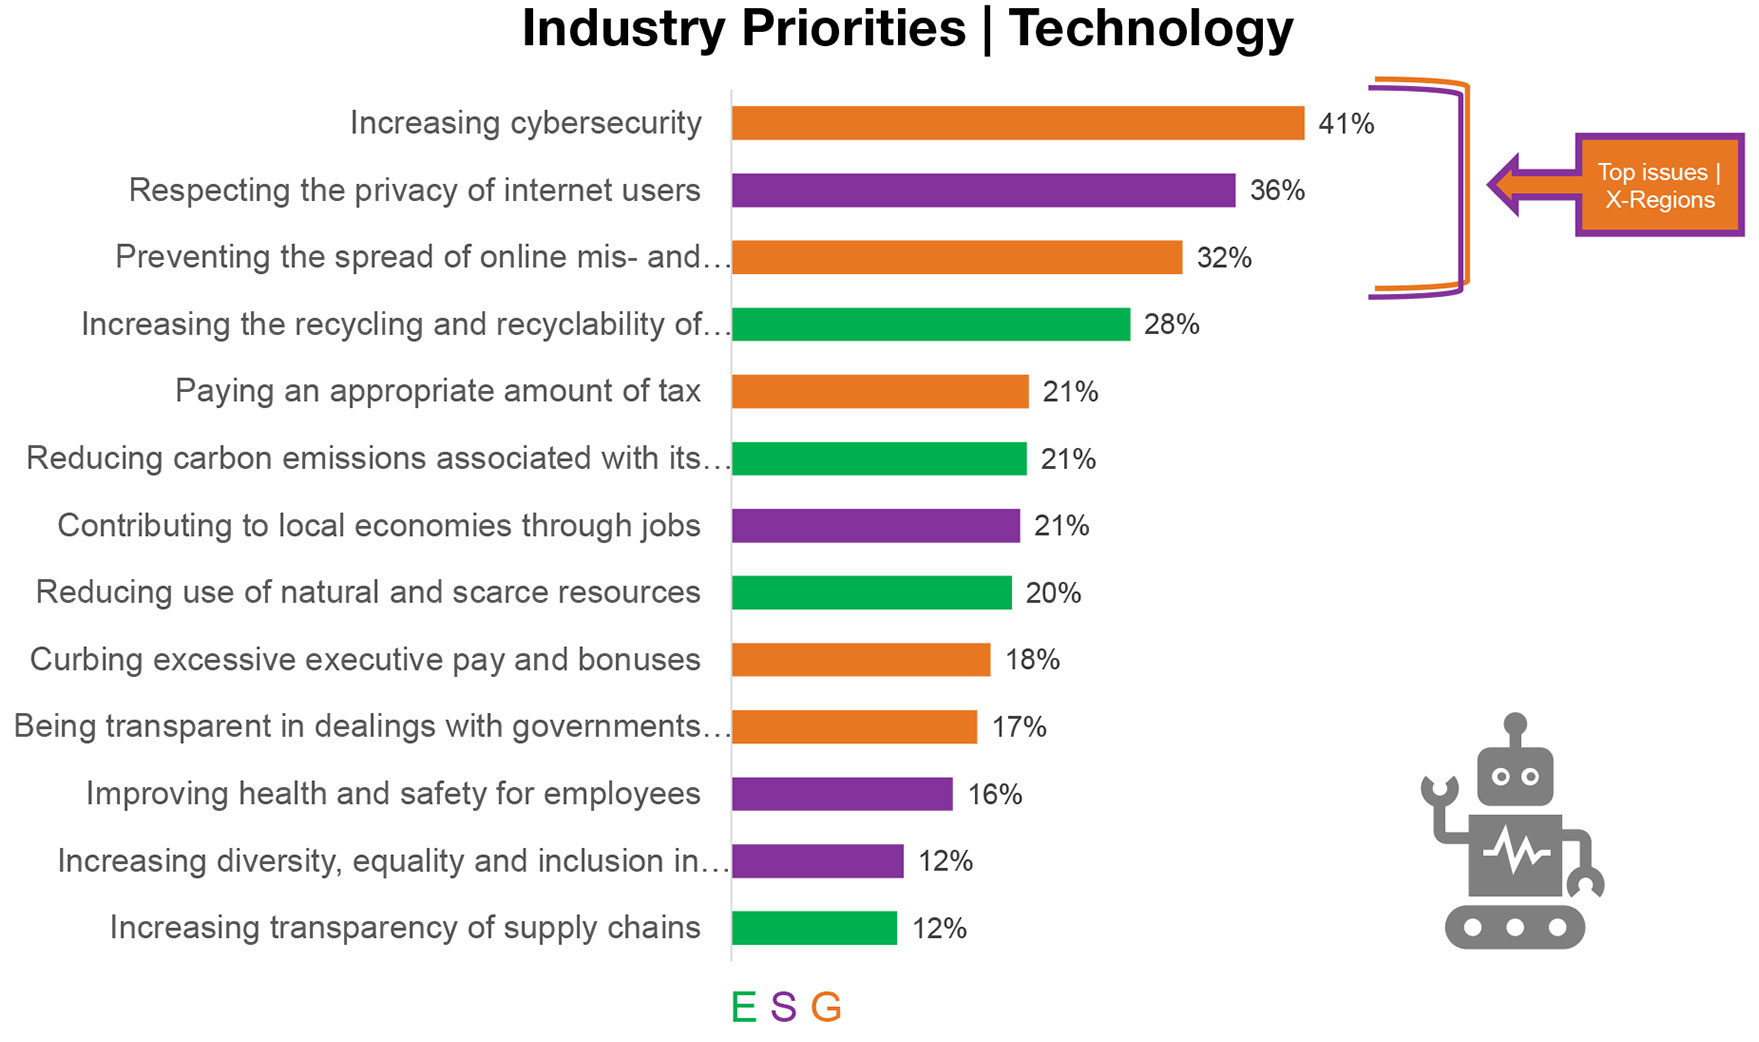 Industry Priorities Technology